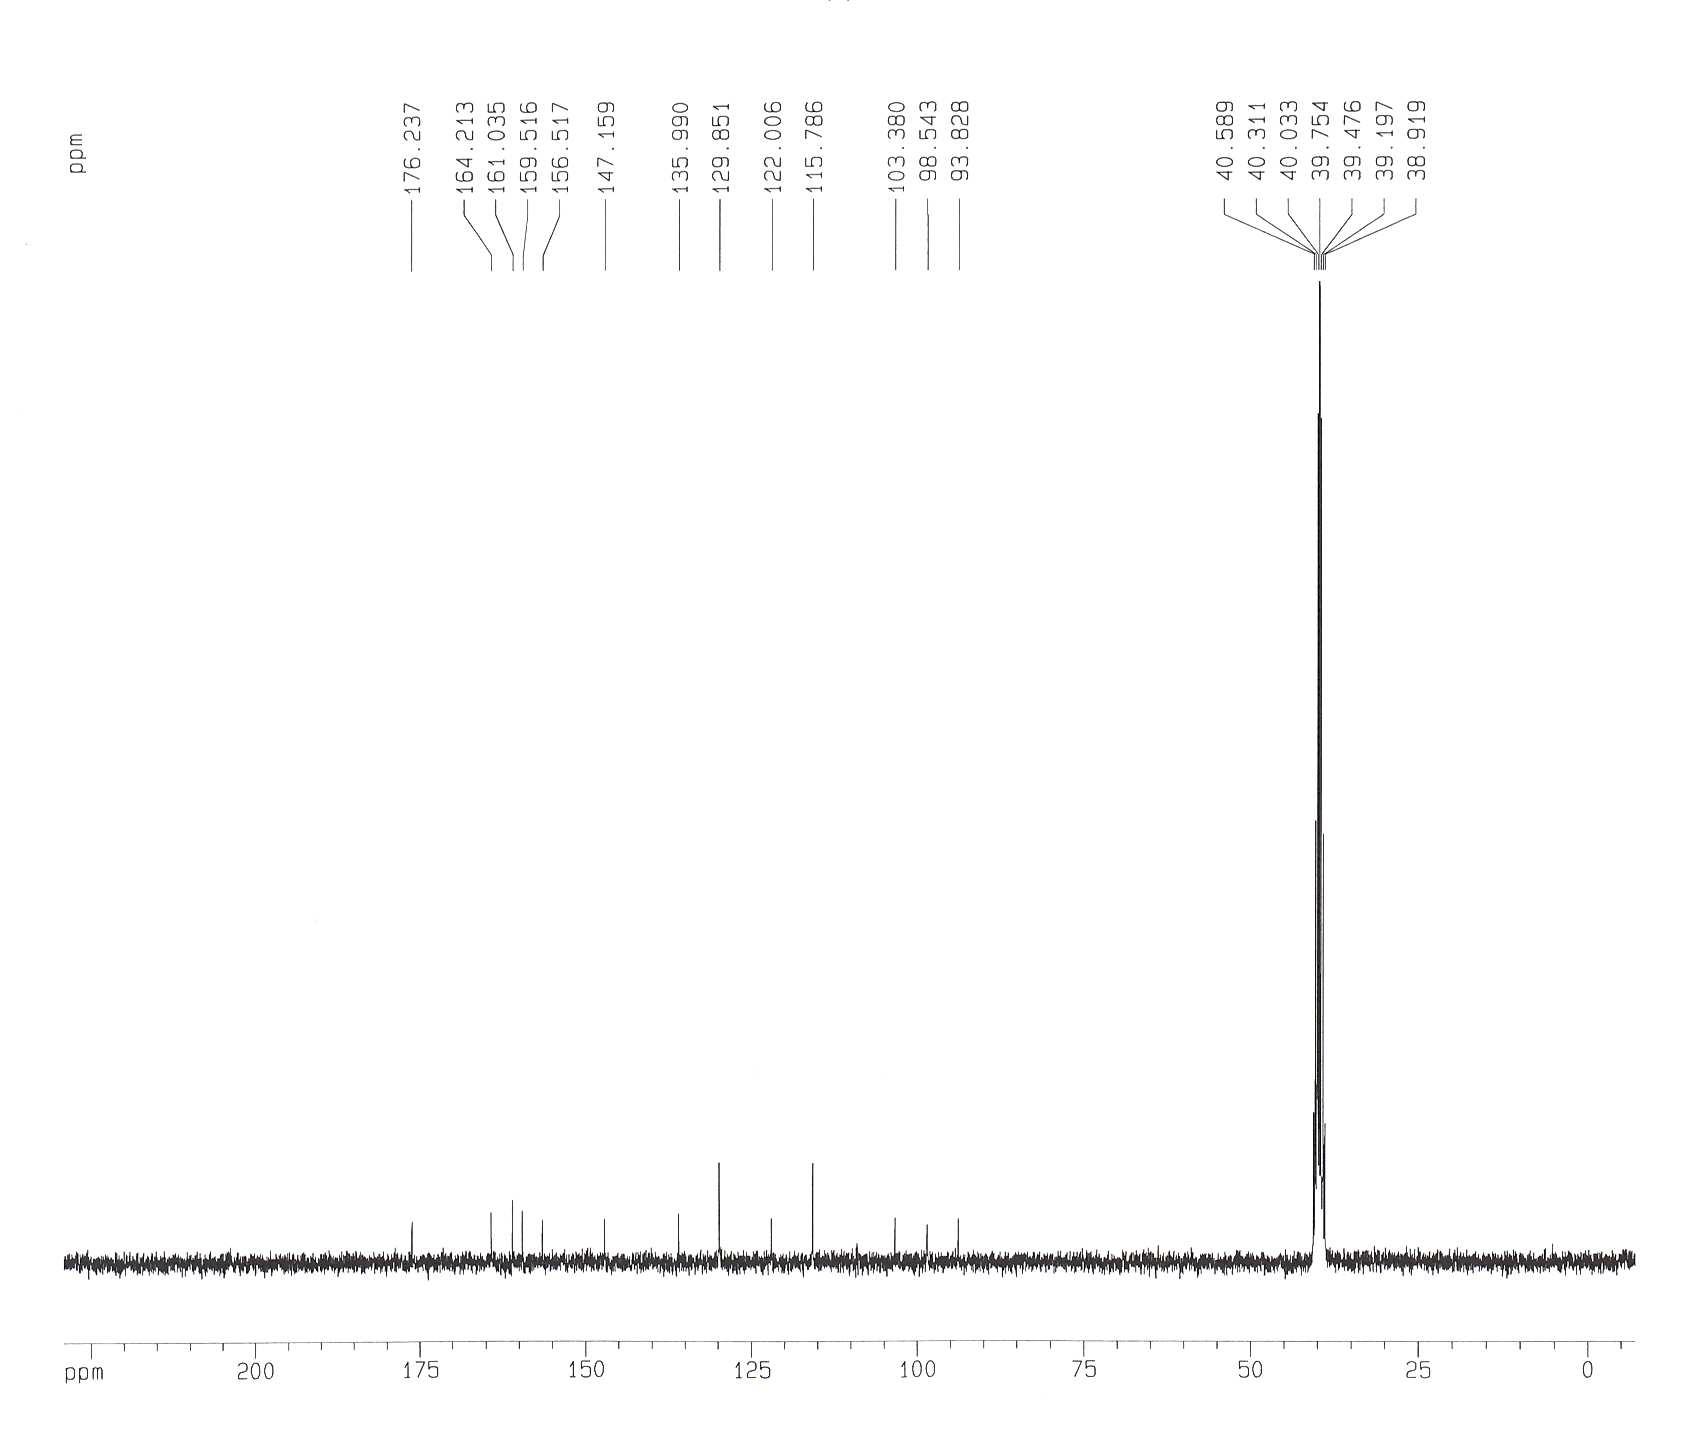 13C-NMR Spectrum of Compound 1